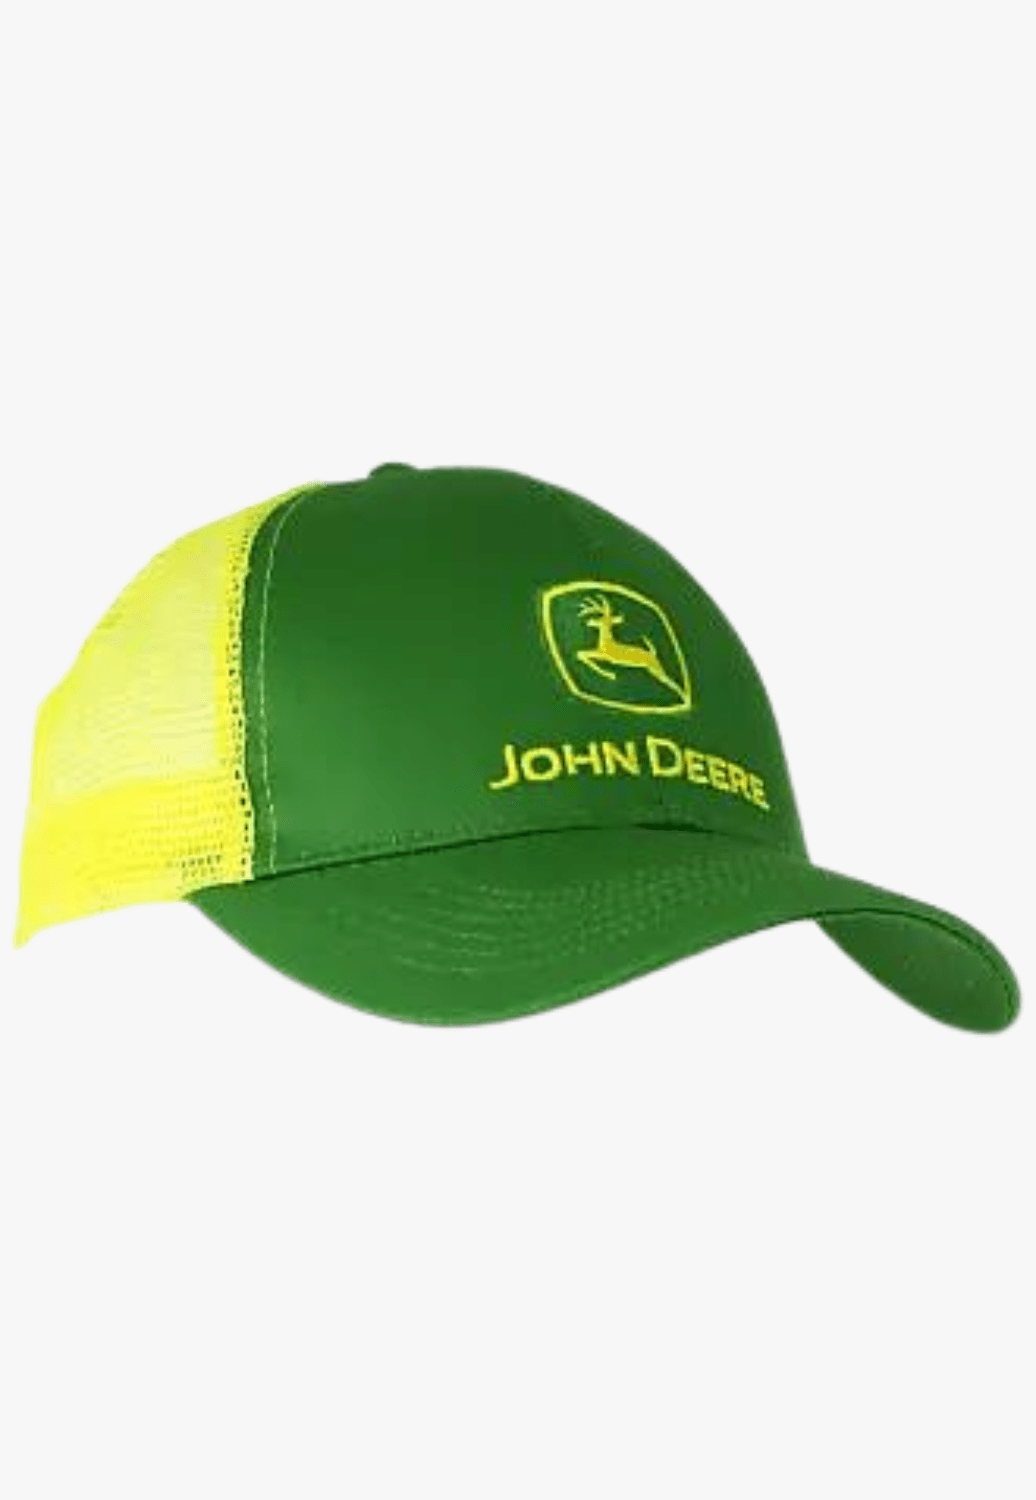 John Deere HATS - Caps Green/Yellow John Deere Logo Mesh Cap